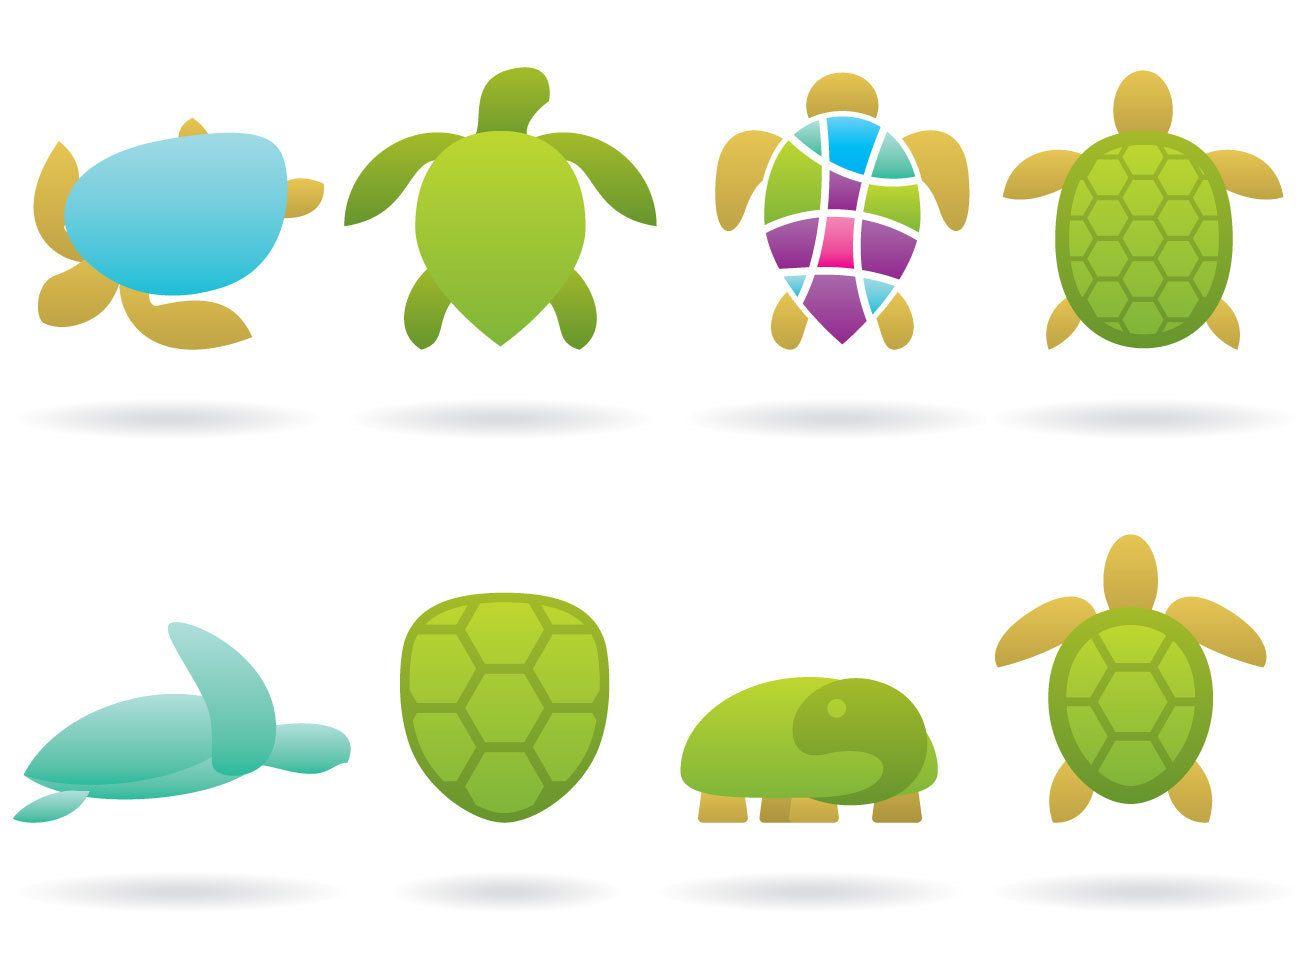 Turtle Logo - Turtle Logo Vectors Vector Art & Graphics | freevector.com